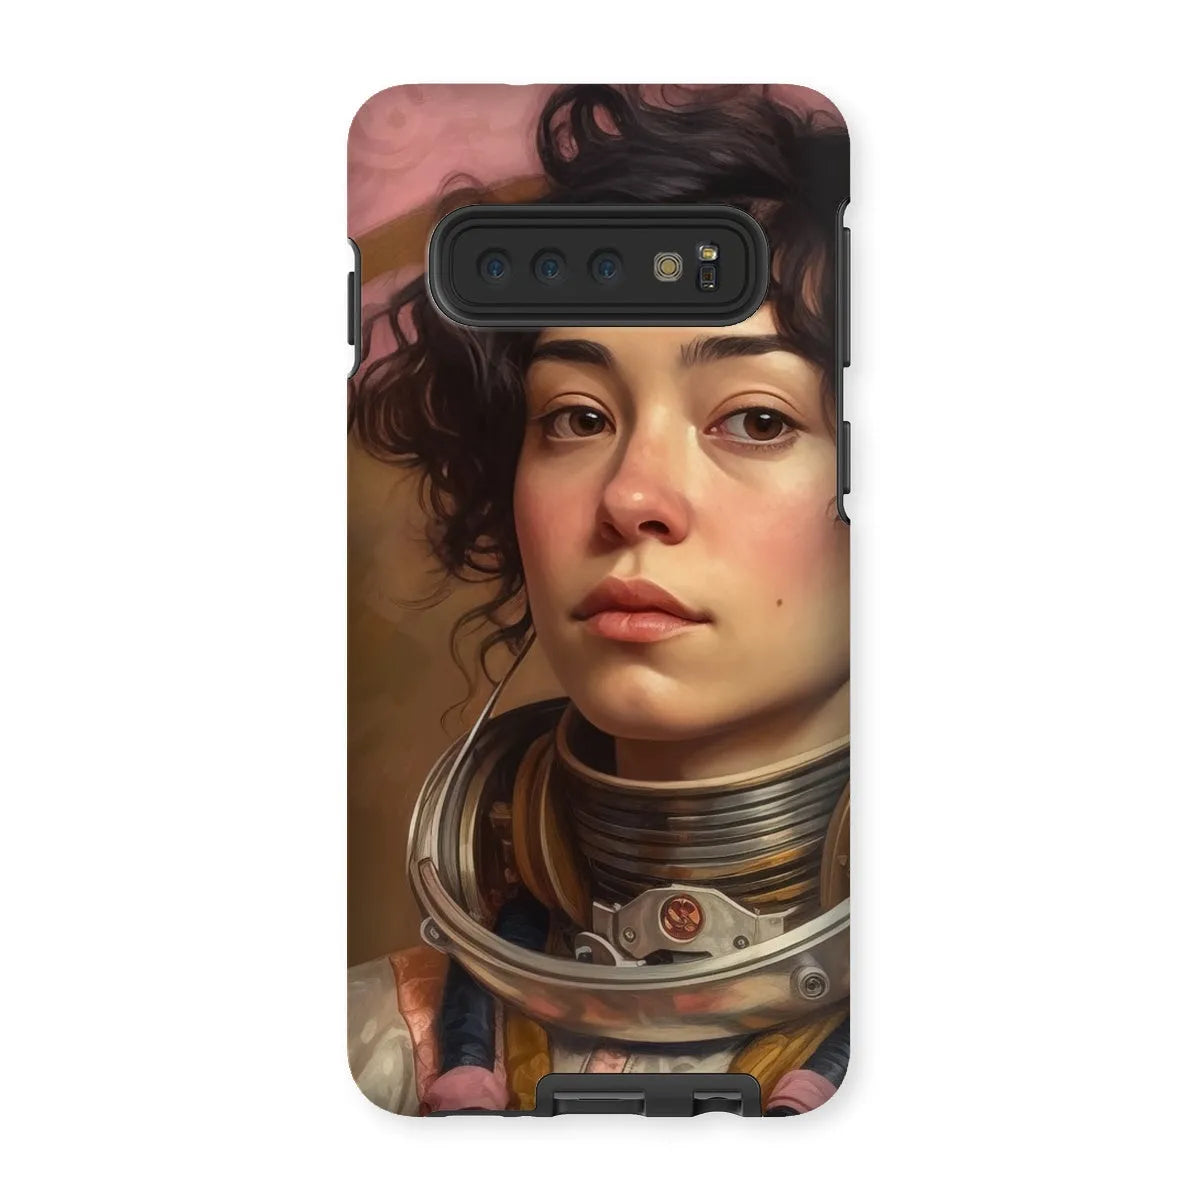 Faustina The Lesbian Astronaut - Lgbtq Art Phone Case - Samsung Galaxy S10 / Matte - Mobile Phone Cases - Aesthetic Art